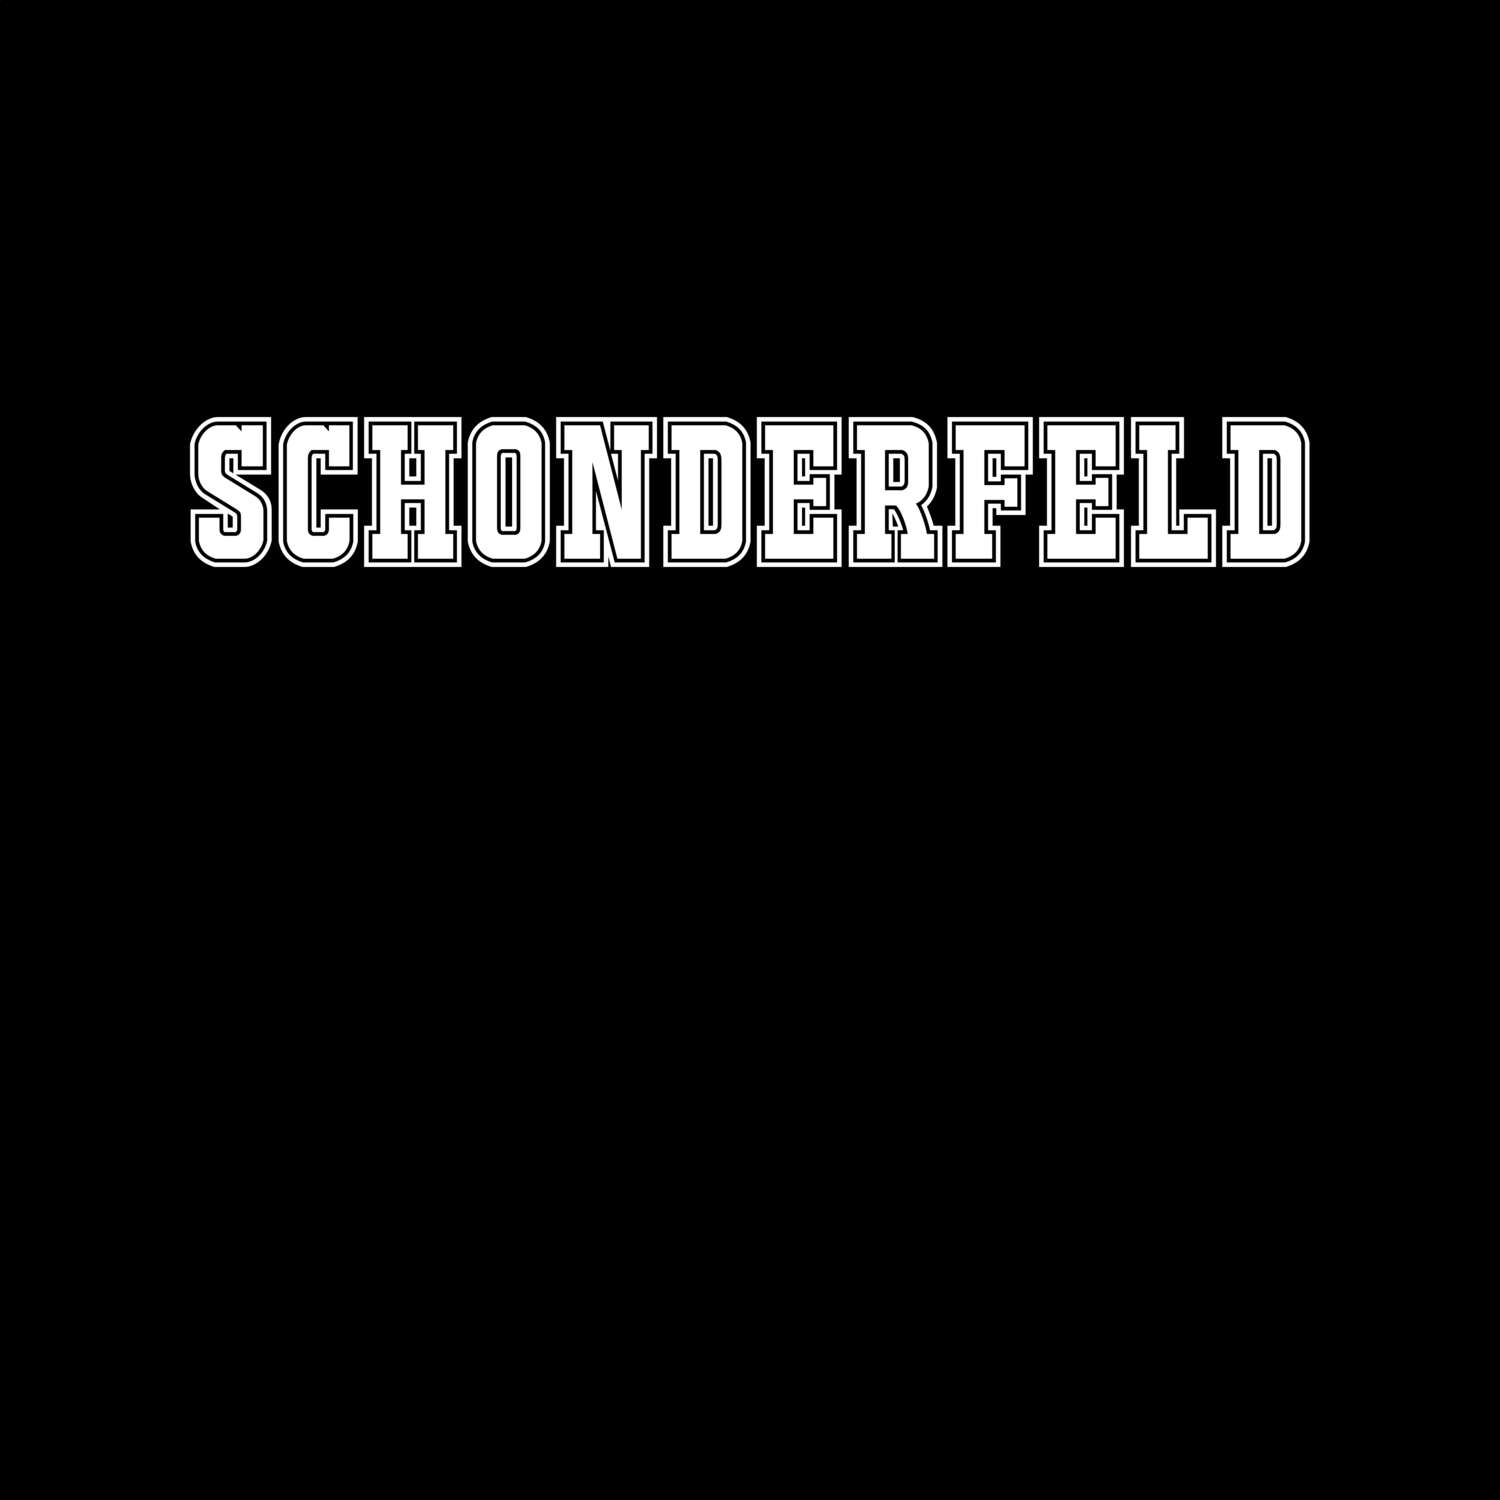 Schonderfeld T-Shirt »Classic«